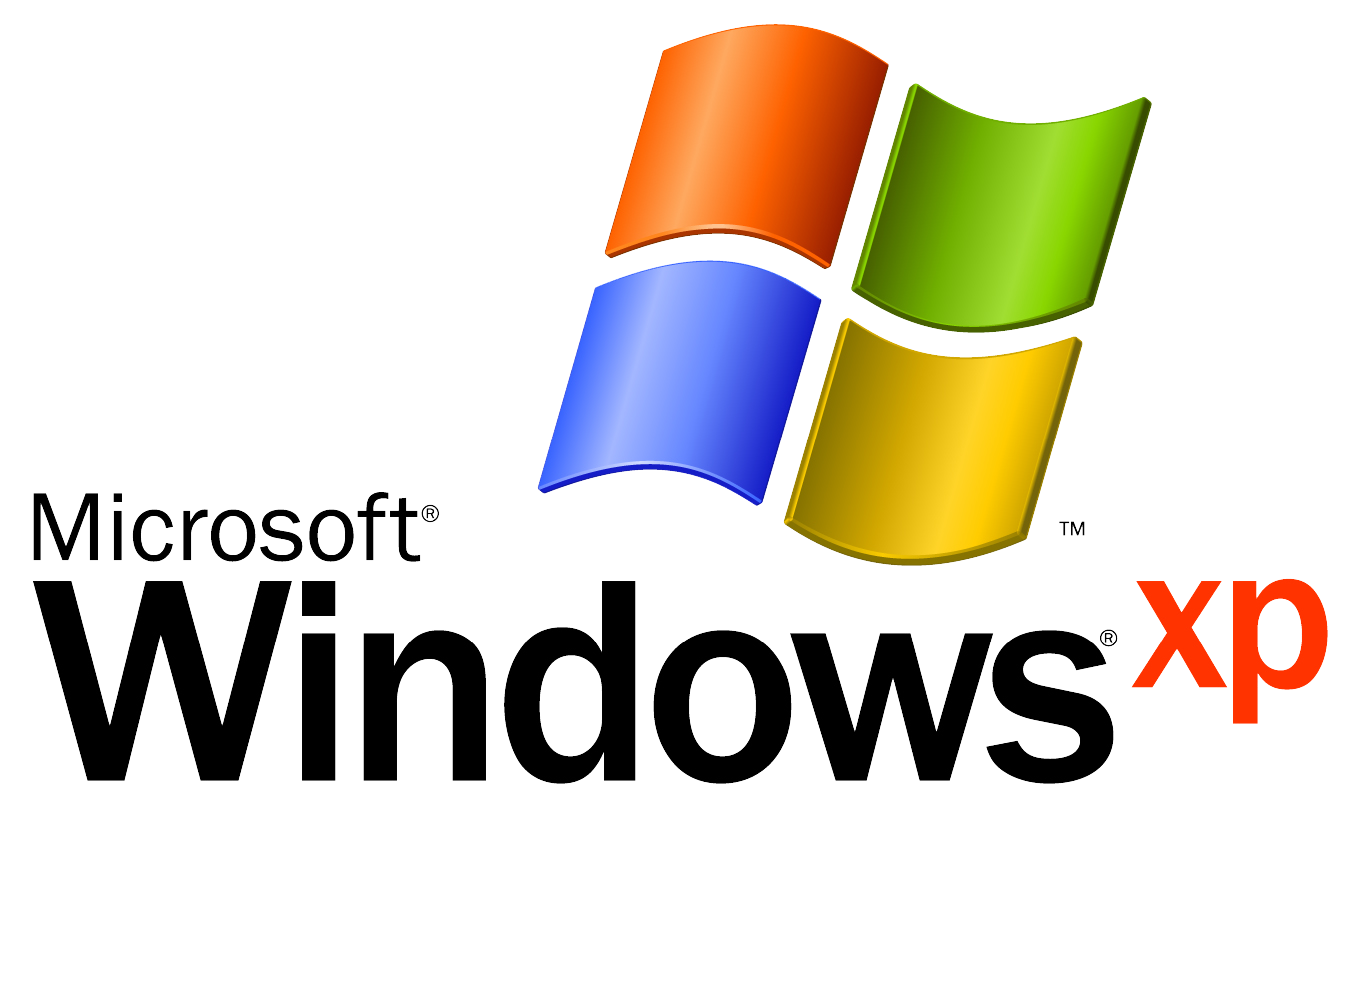 [windowsXp.png]